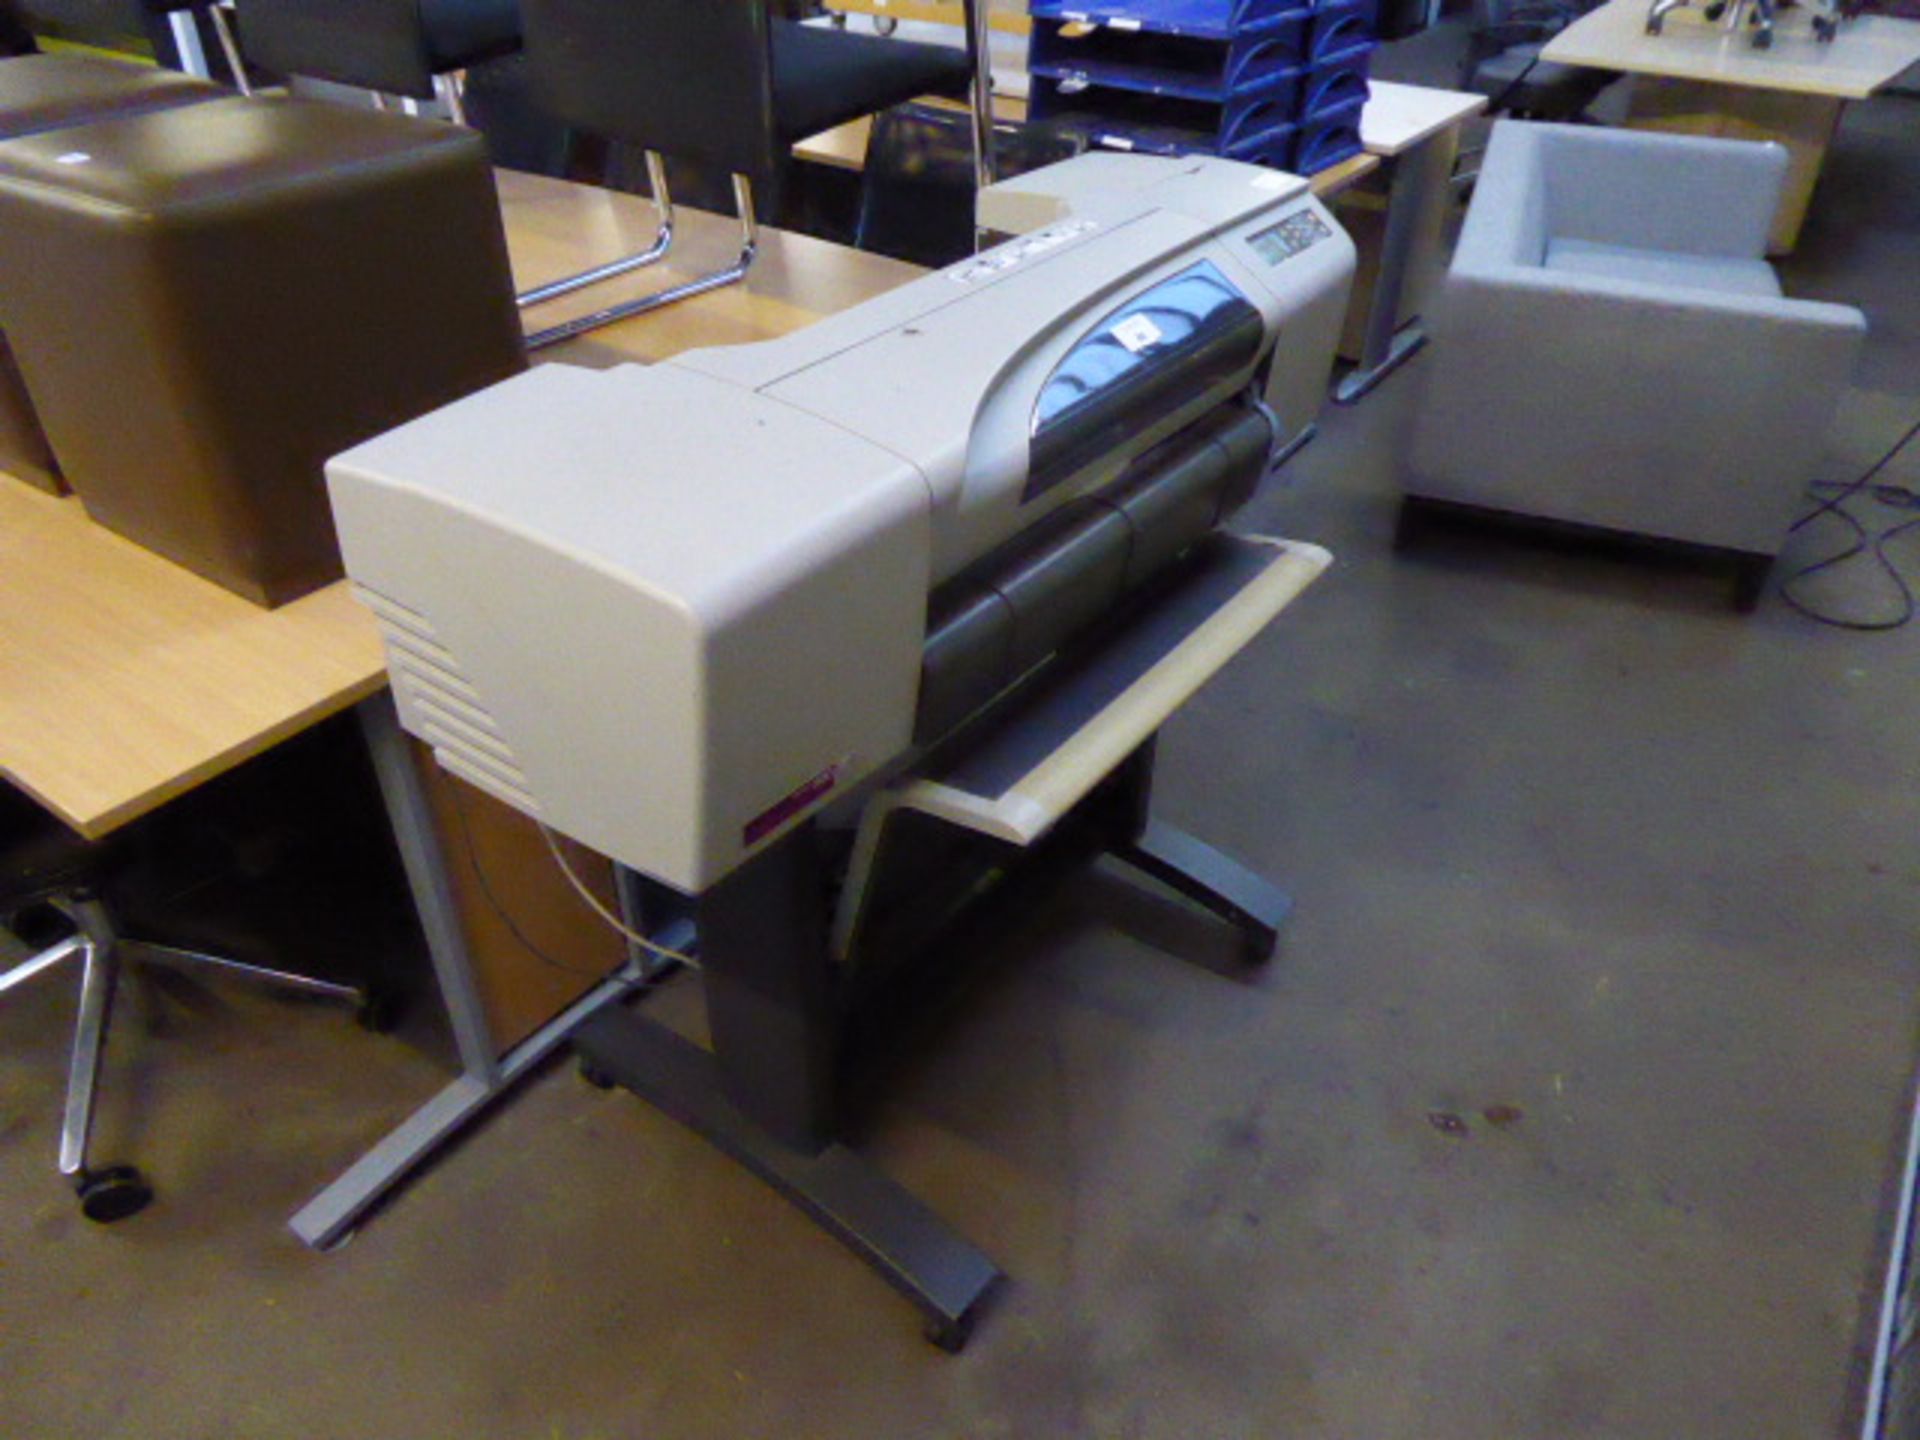 Hewlett Packard Design Jet 500 wide format printer on mobile stand